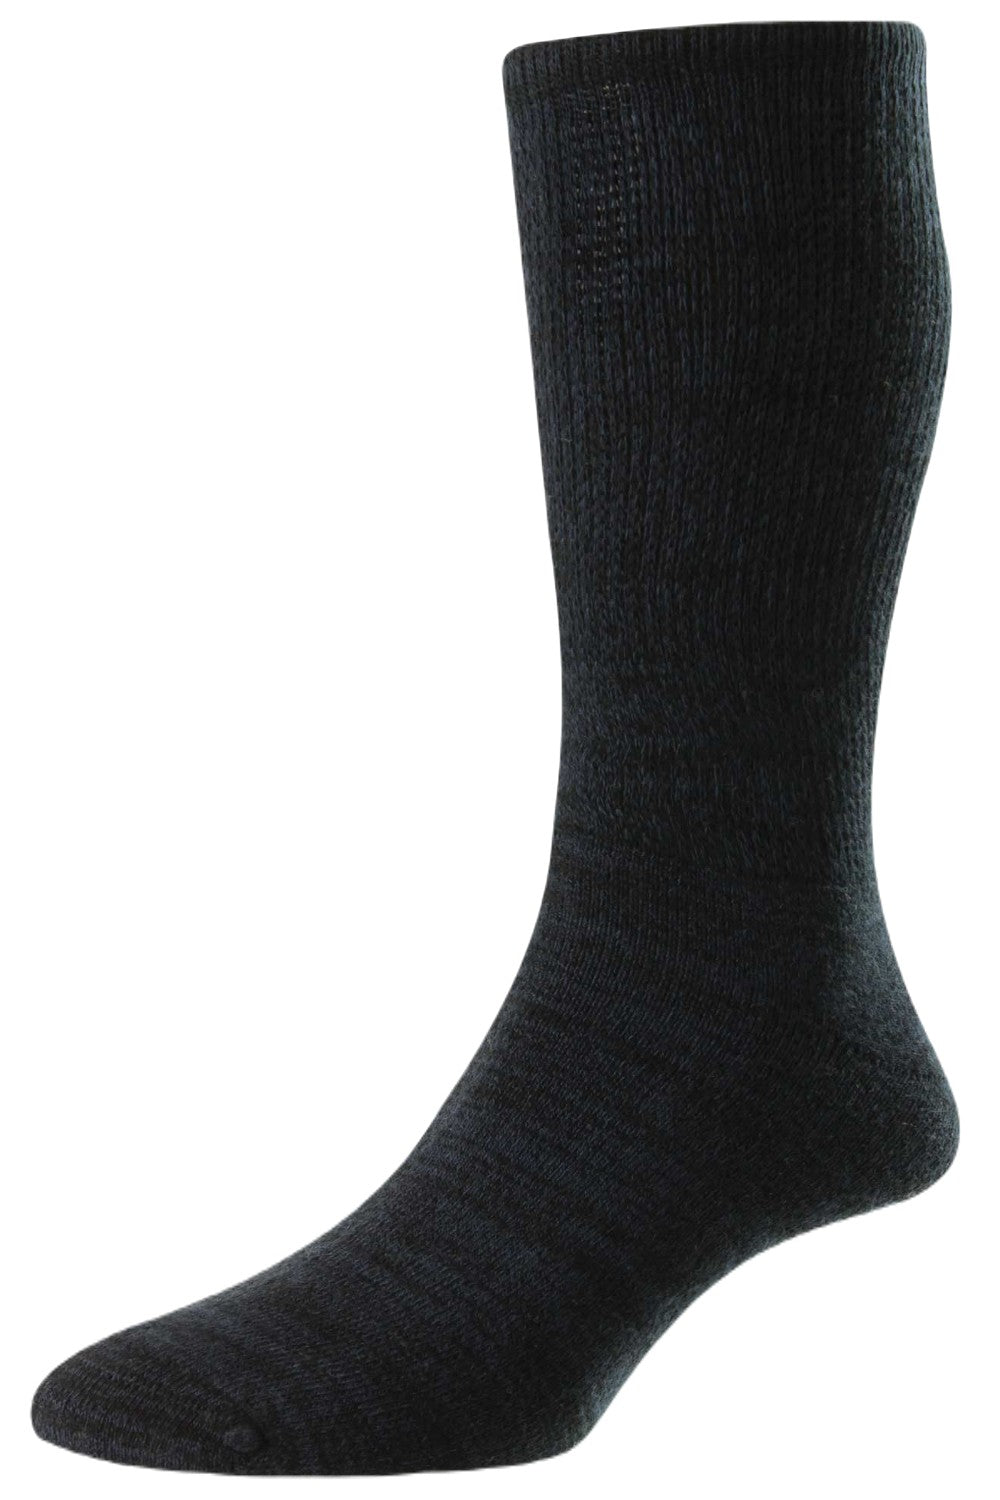 HJ Hall Lightweight Diabetic Cotton Socks in Black/Navy 